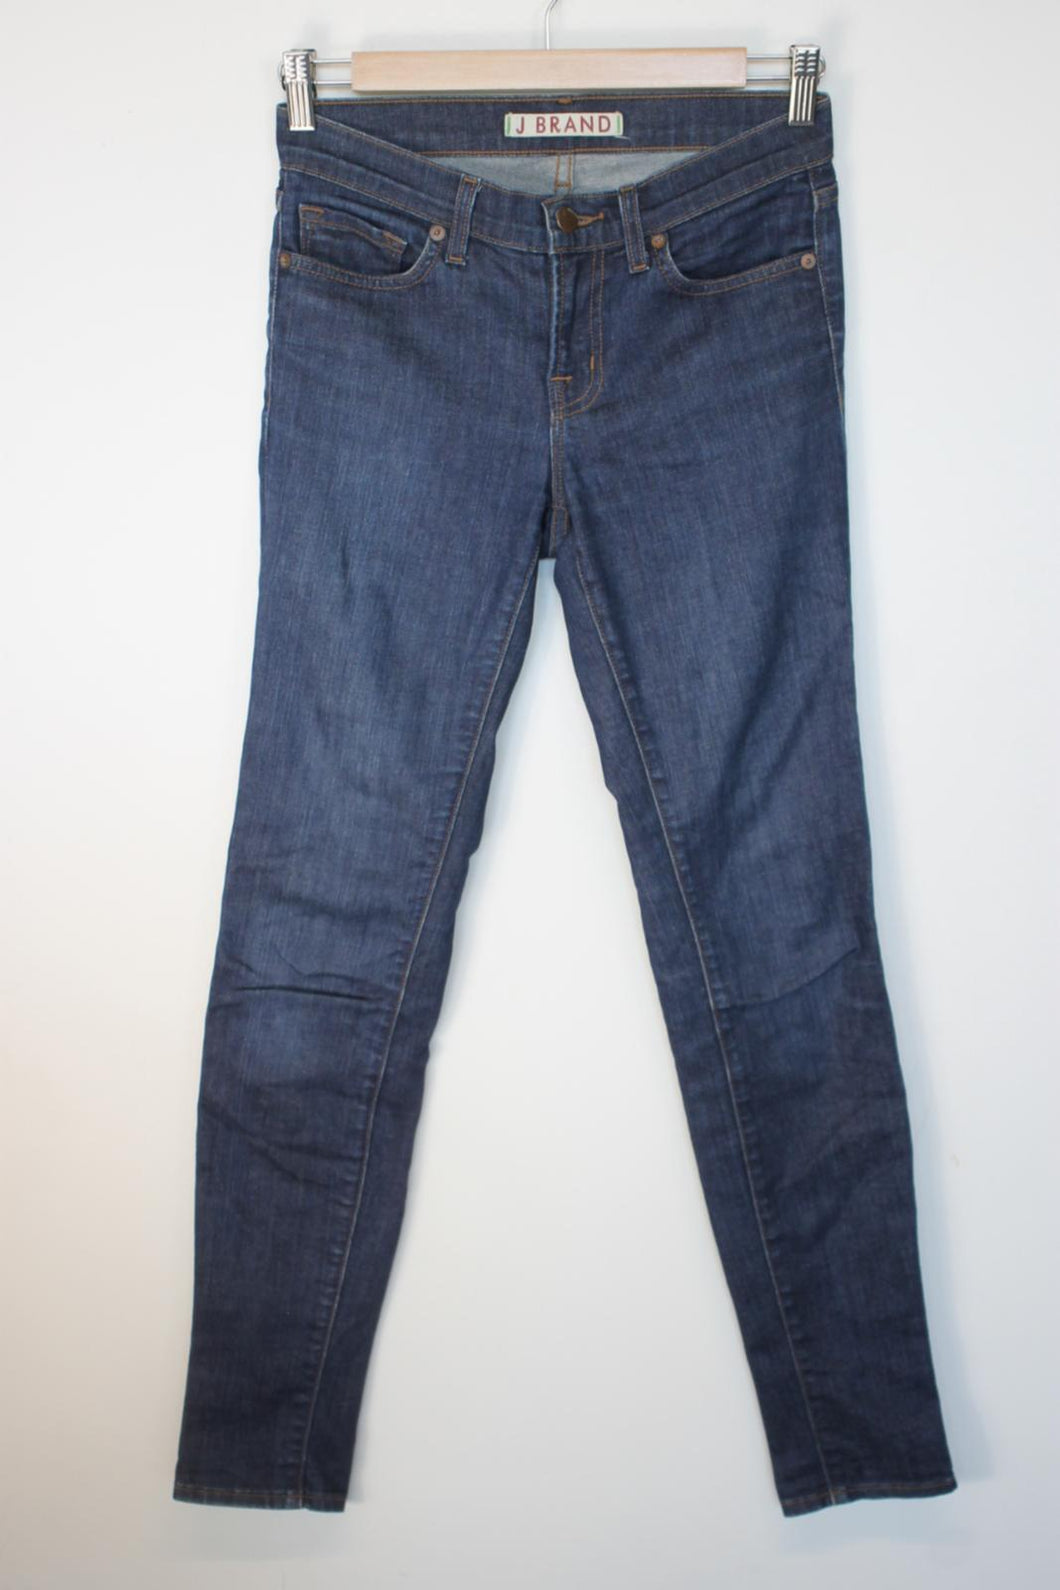 J BRAND Ladies Dark Blue Cotton Denim Slim Tapered Low-Rise Jeans Size 25